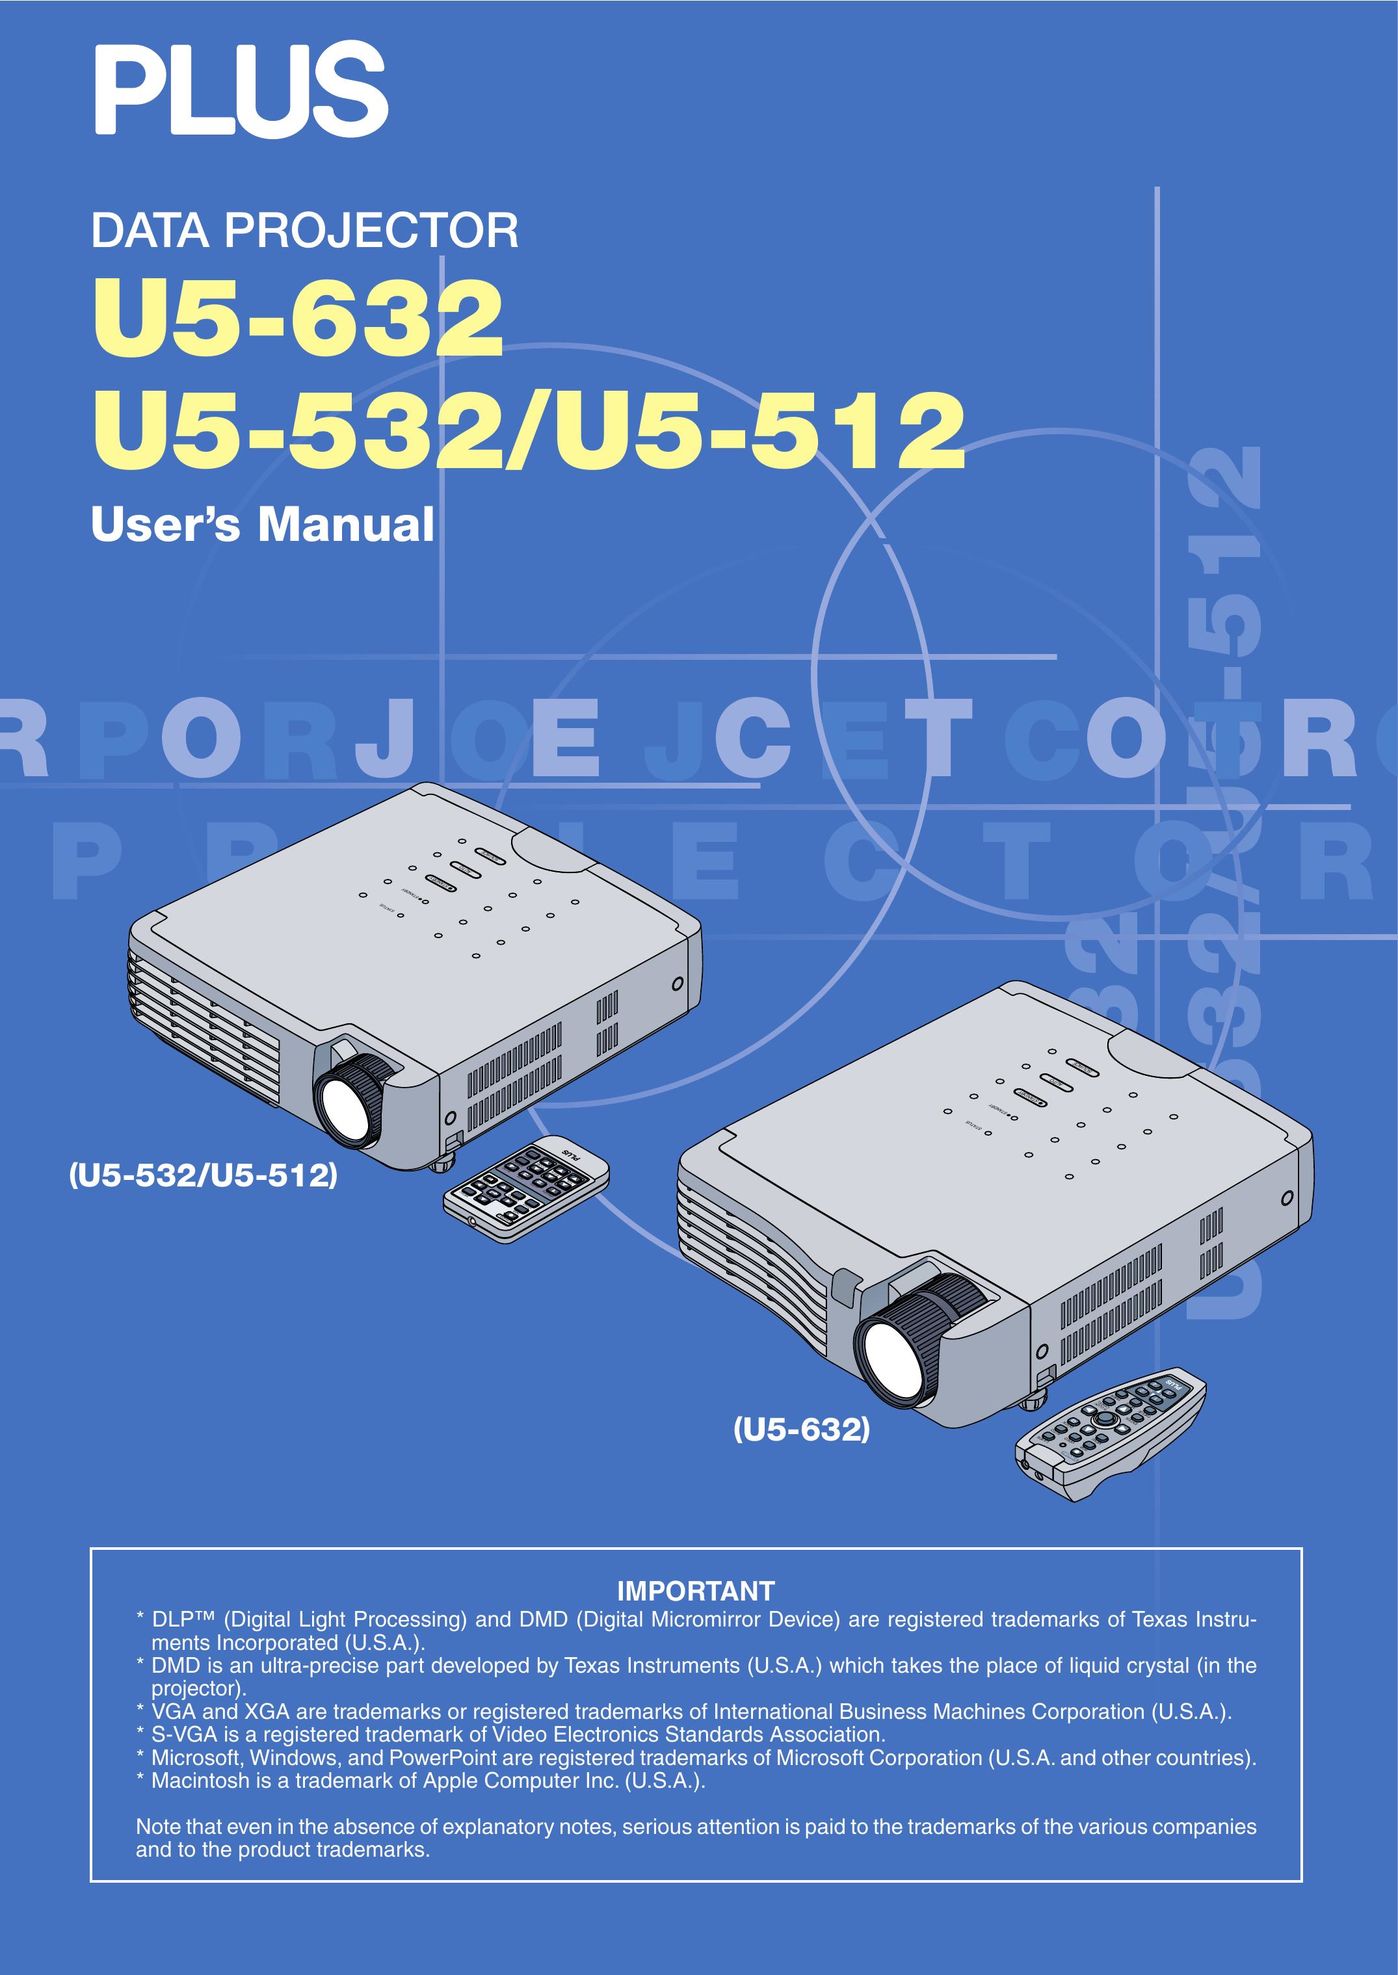 PLUS Vision U5-532 Projector User Manual